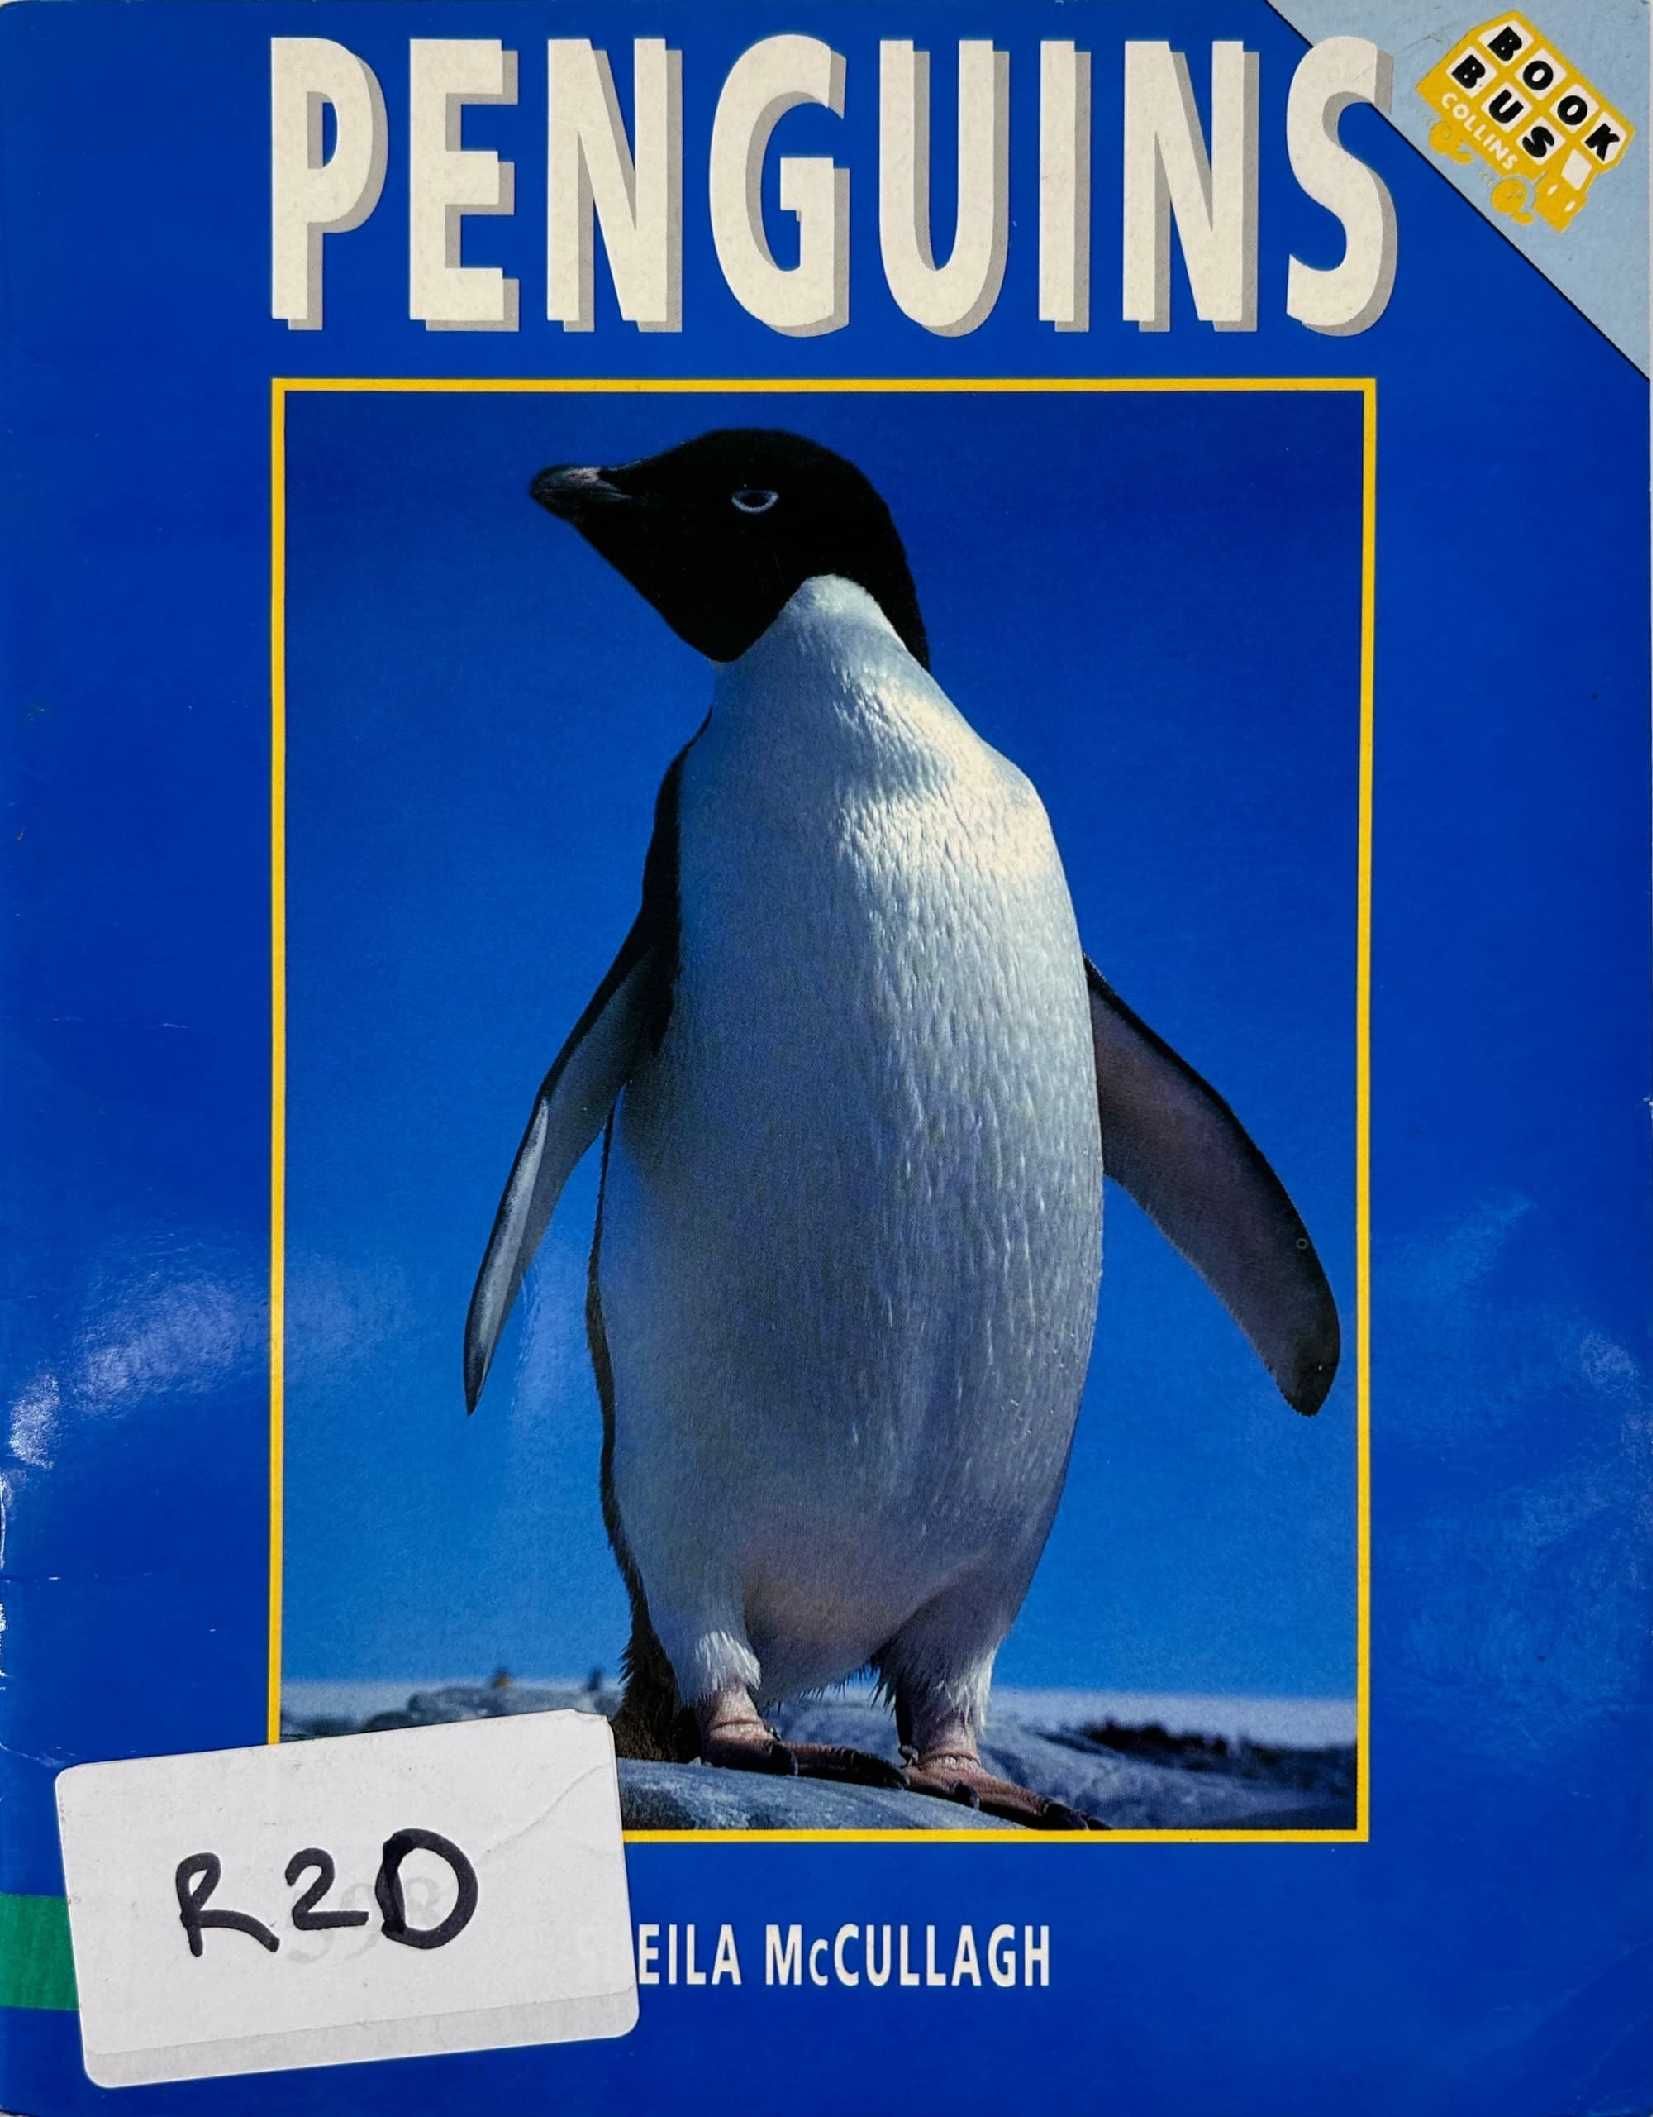 Penguins	Sheila McCullagh książka o pingwinach po angielsku